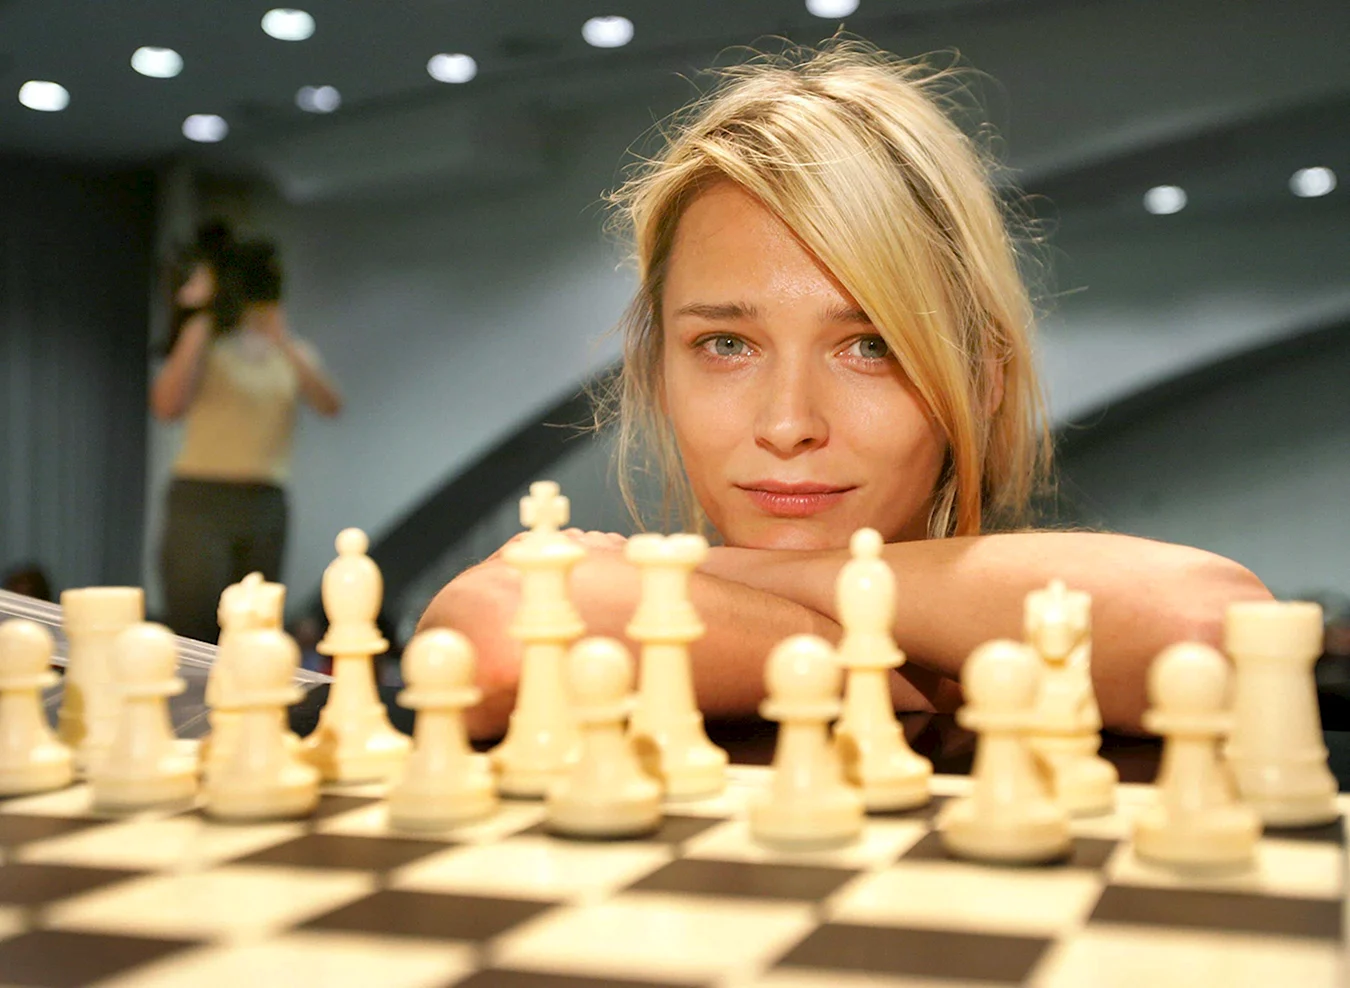 Джессика басланд шахматы